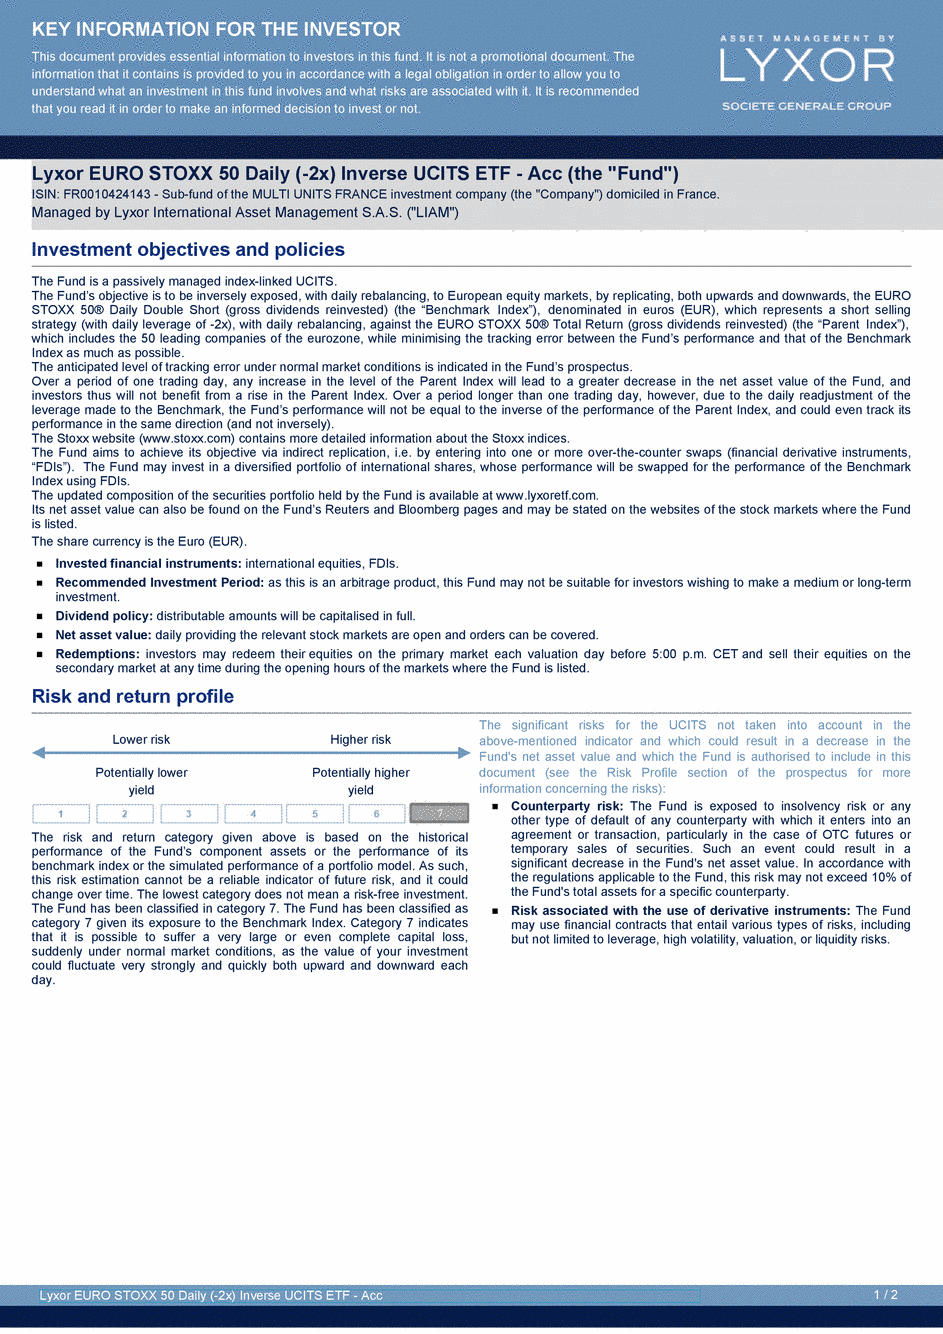 DICI Lyxor EURO STOXX 50 Daily (-2x) Inverse UCITS ETF - Acc - 19/02/2021 - Anglais